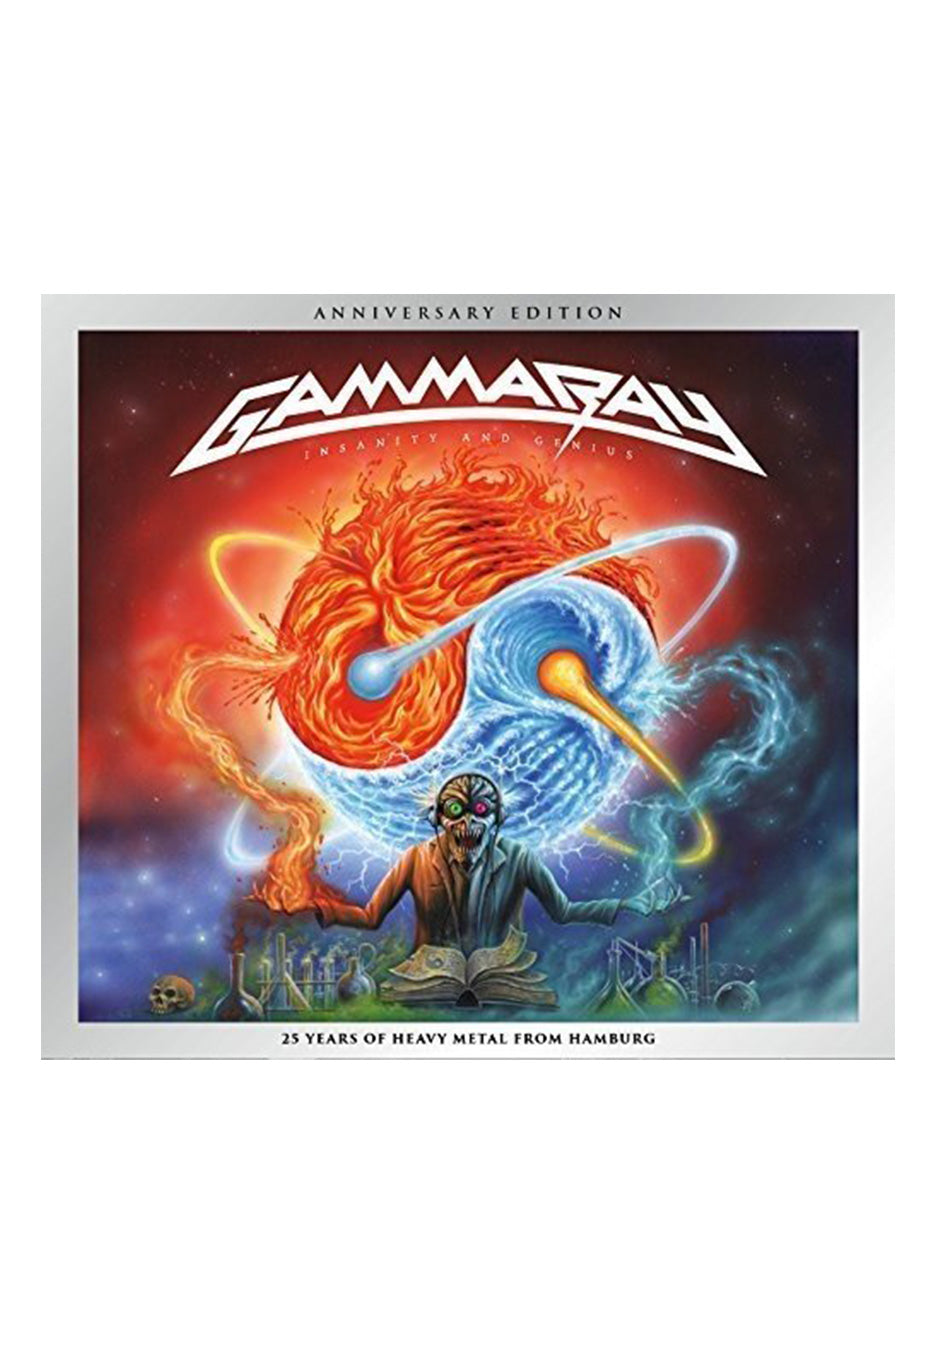 Gamma Ray - Insanity And Genius (Anniversary Edition) - 2 CD